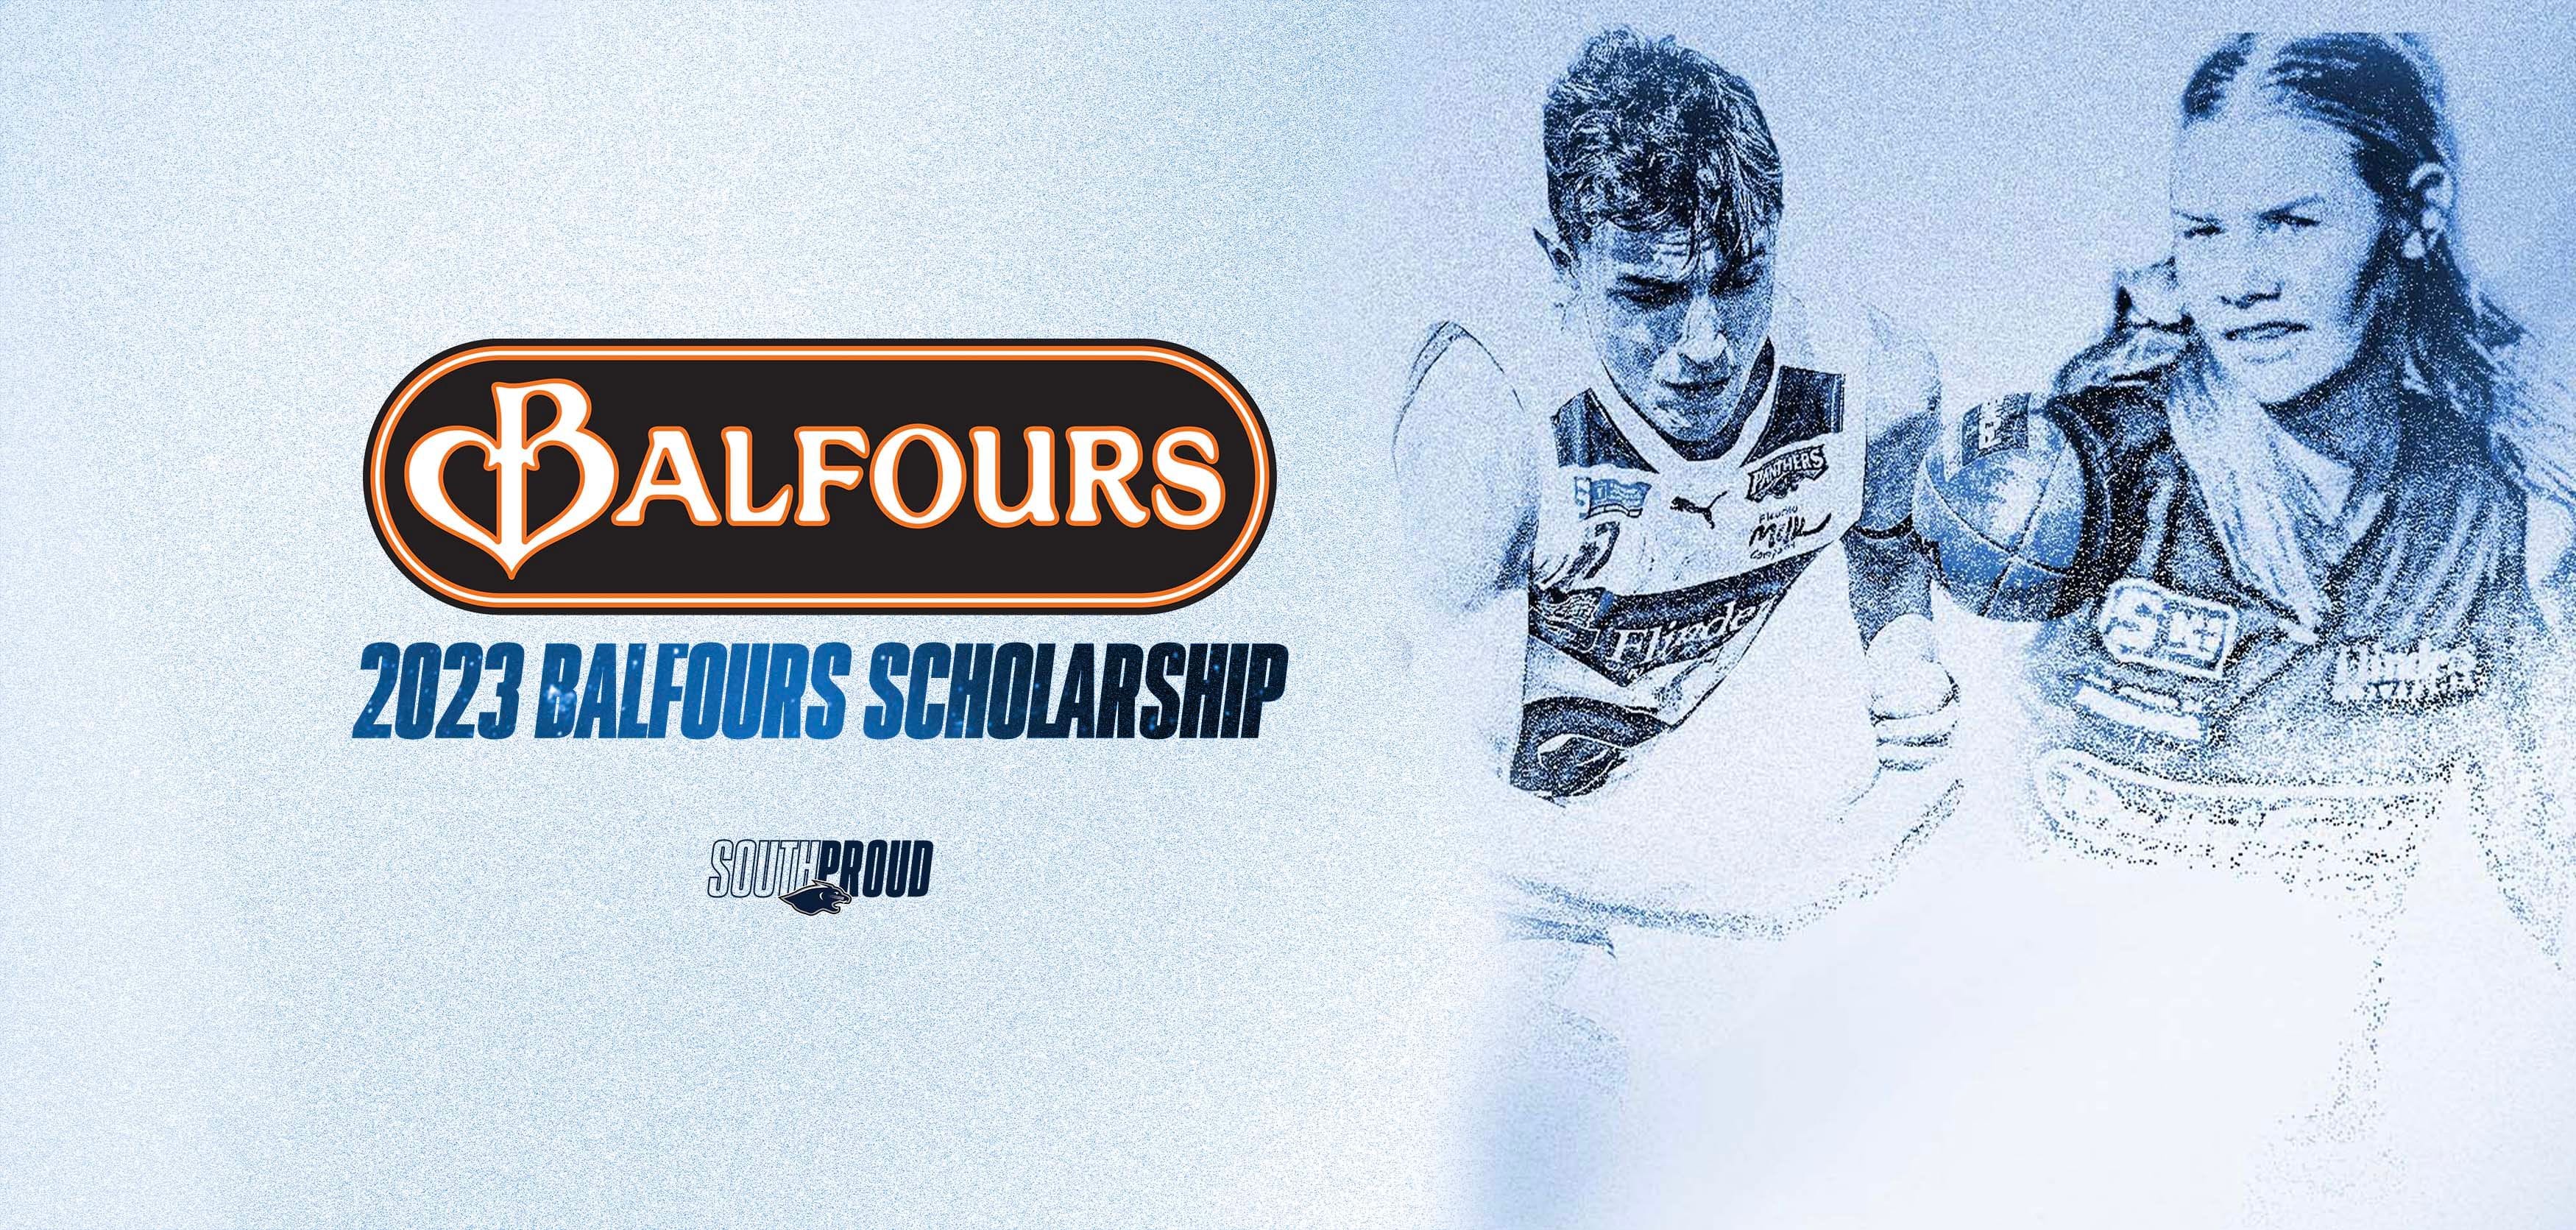 2023 Balfours Scholarship